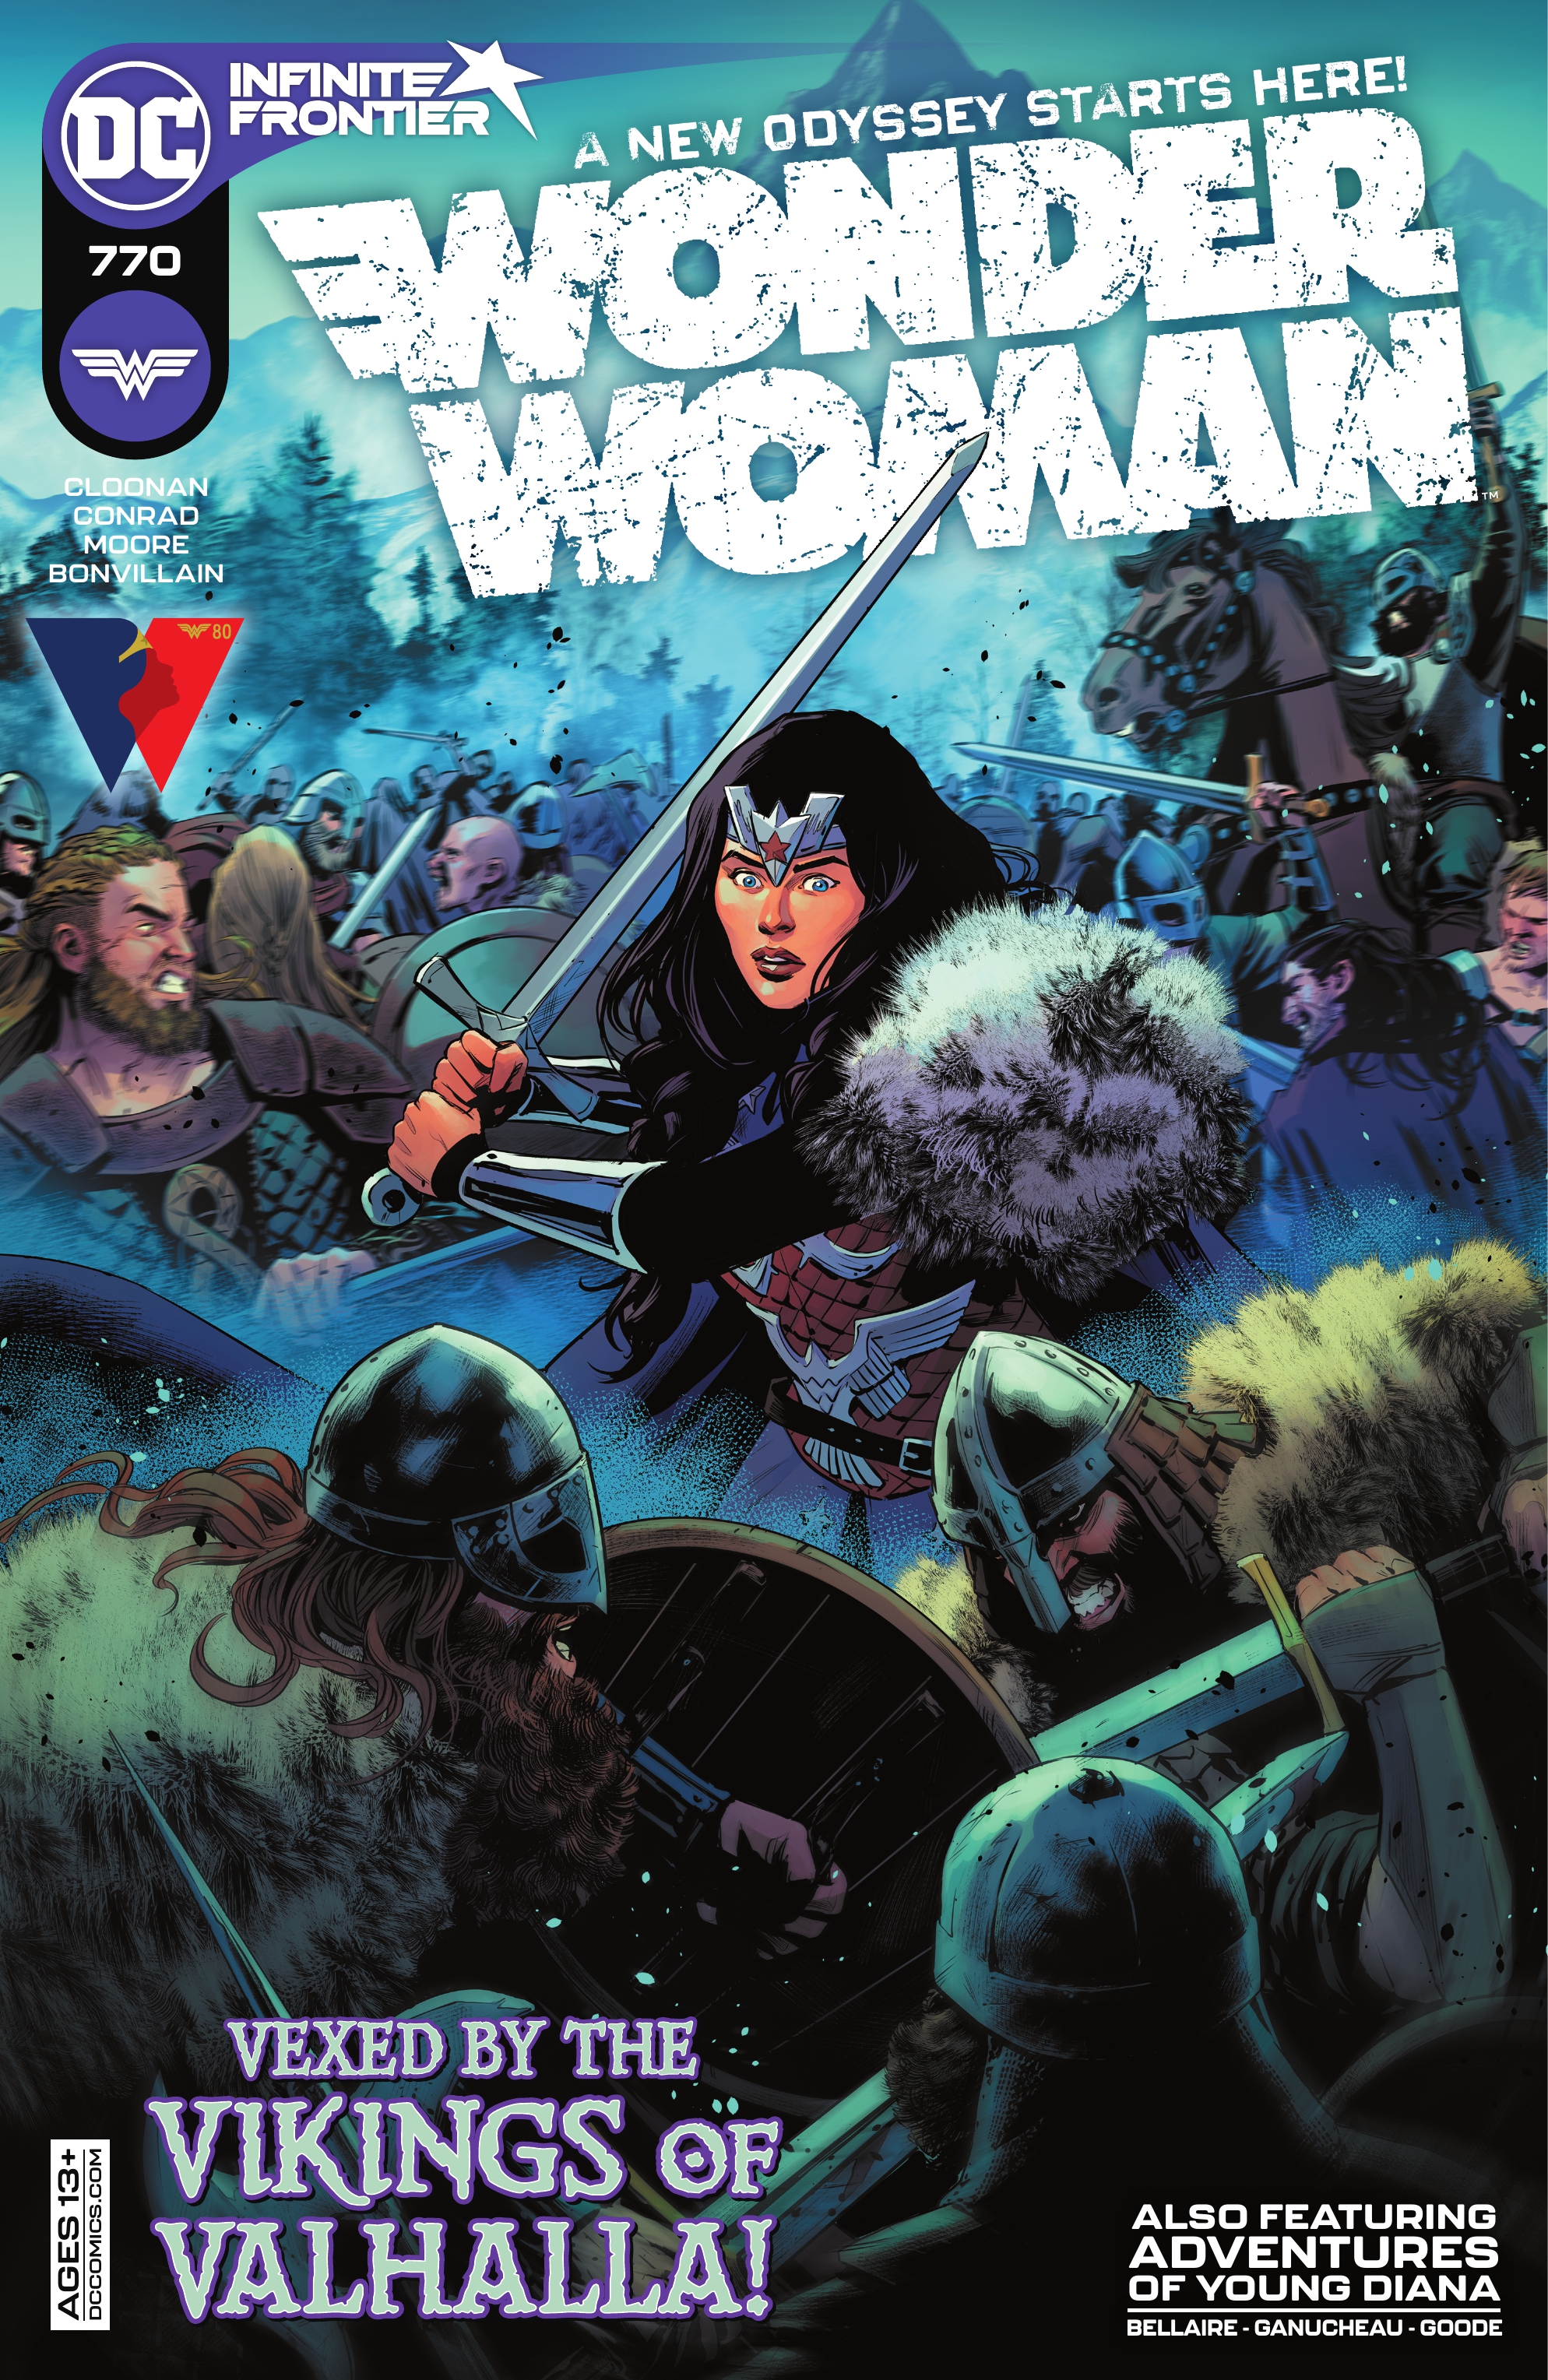 Wonder woman 2016 read online